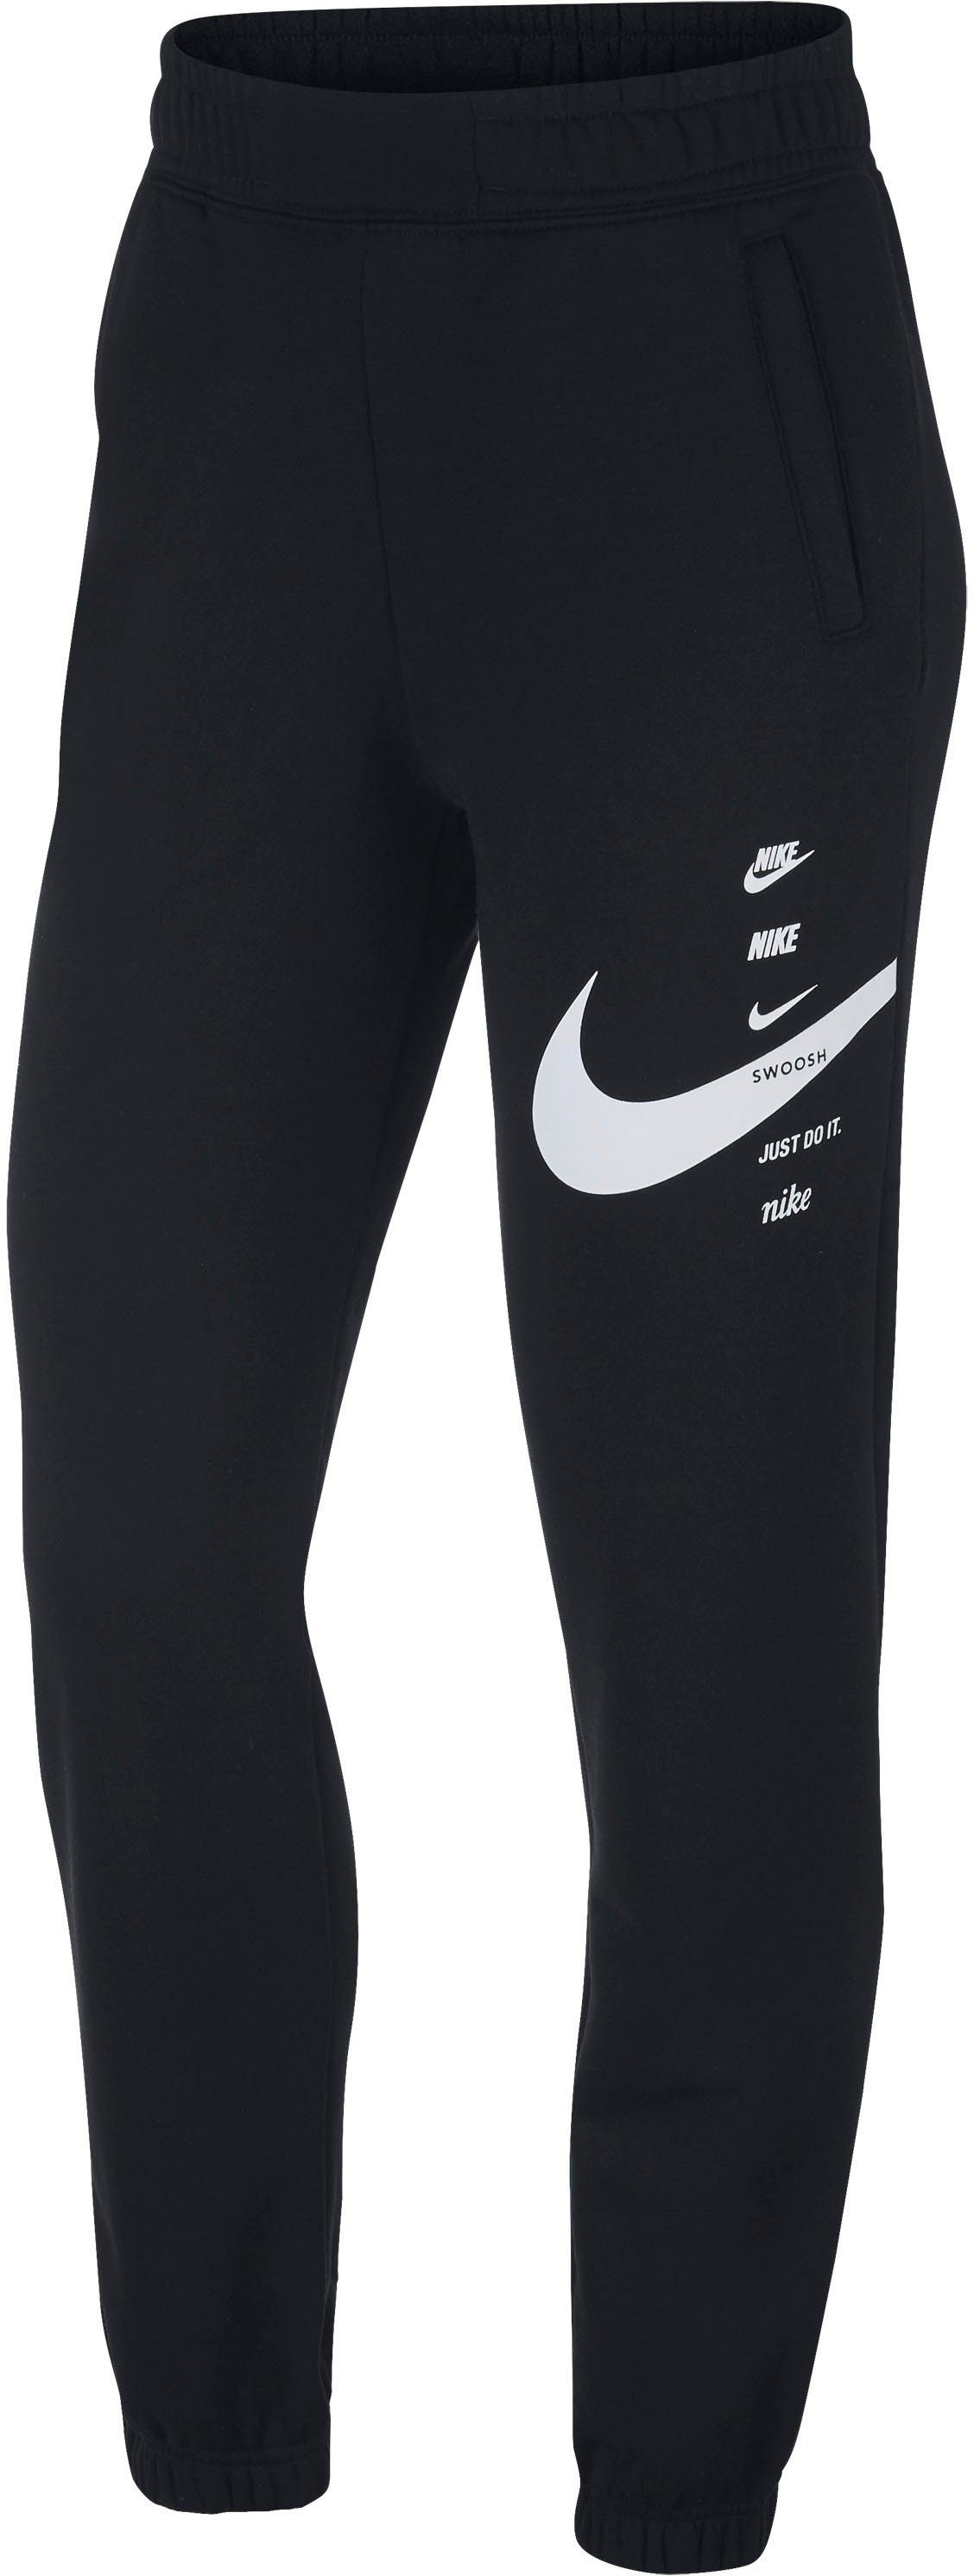 Nike Jogginghose Damen online kaufen | OTTO